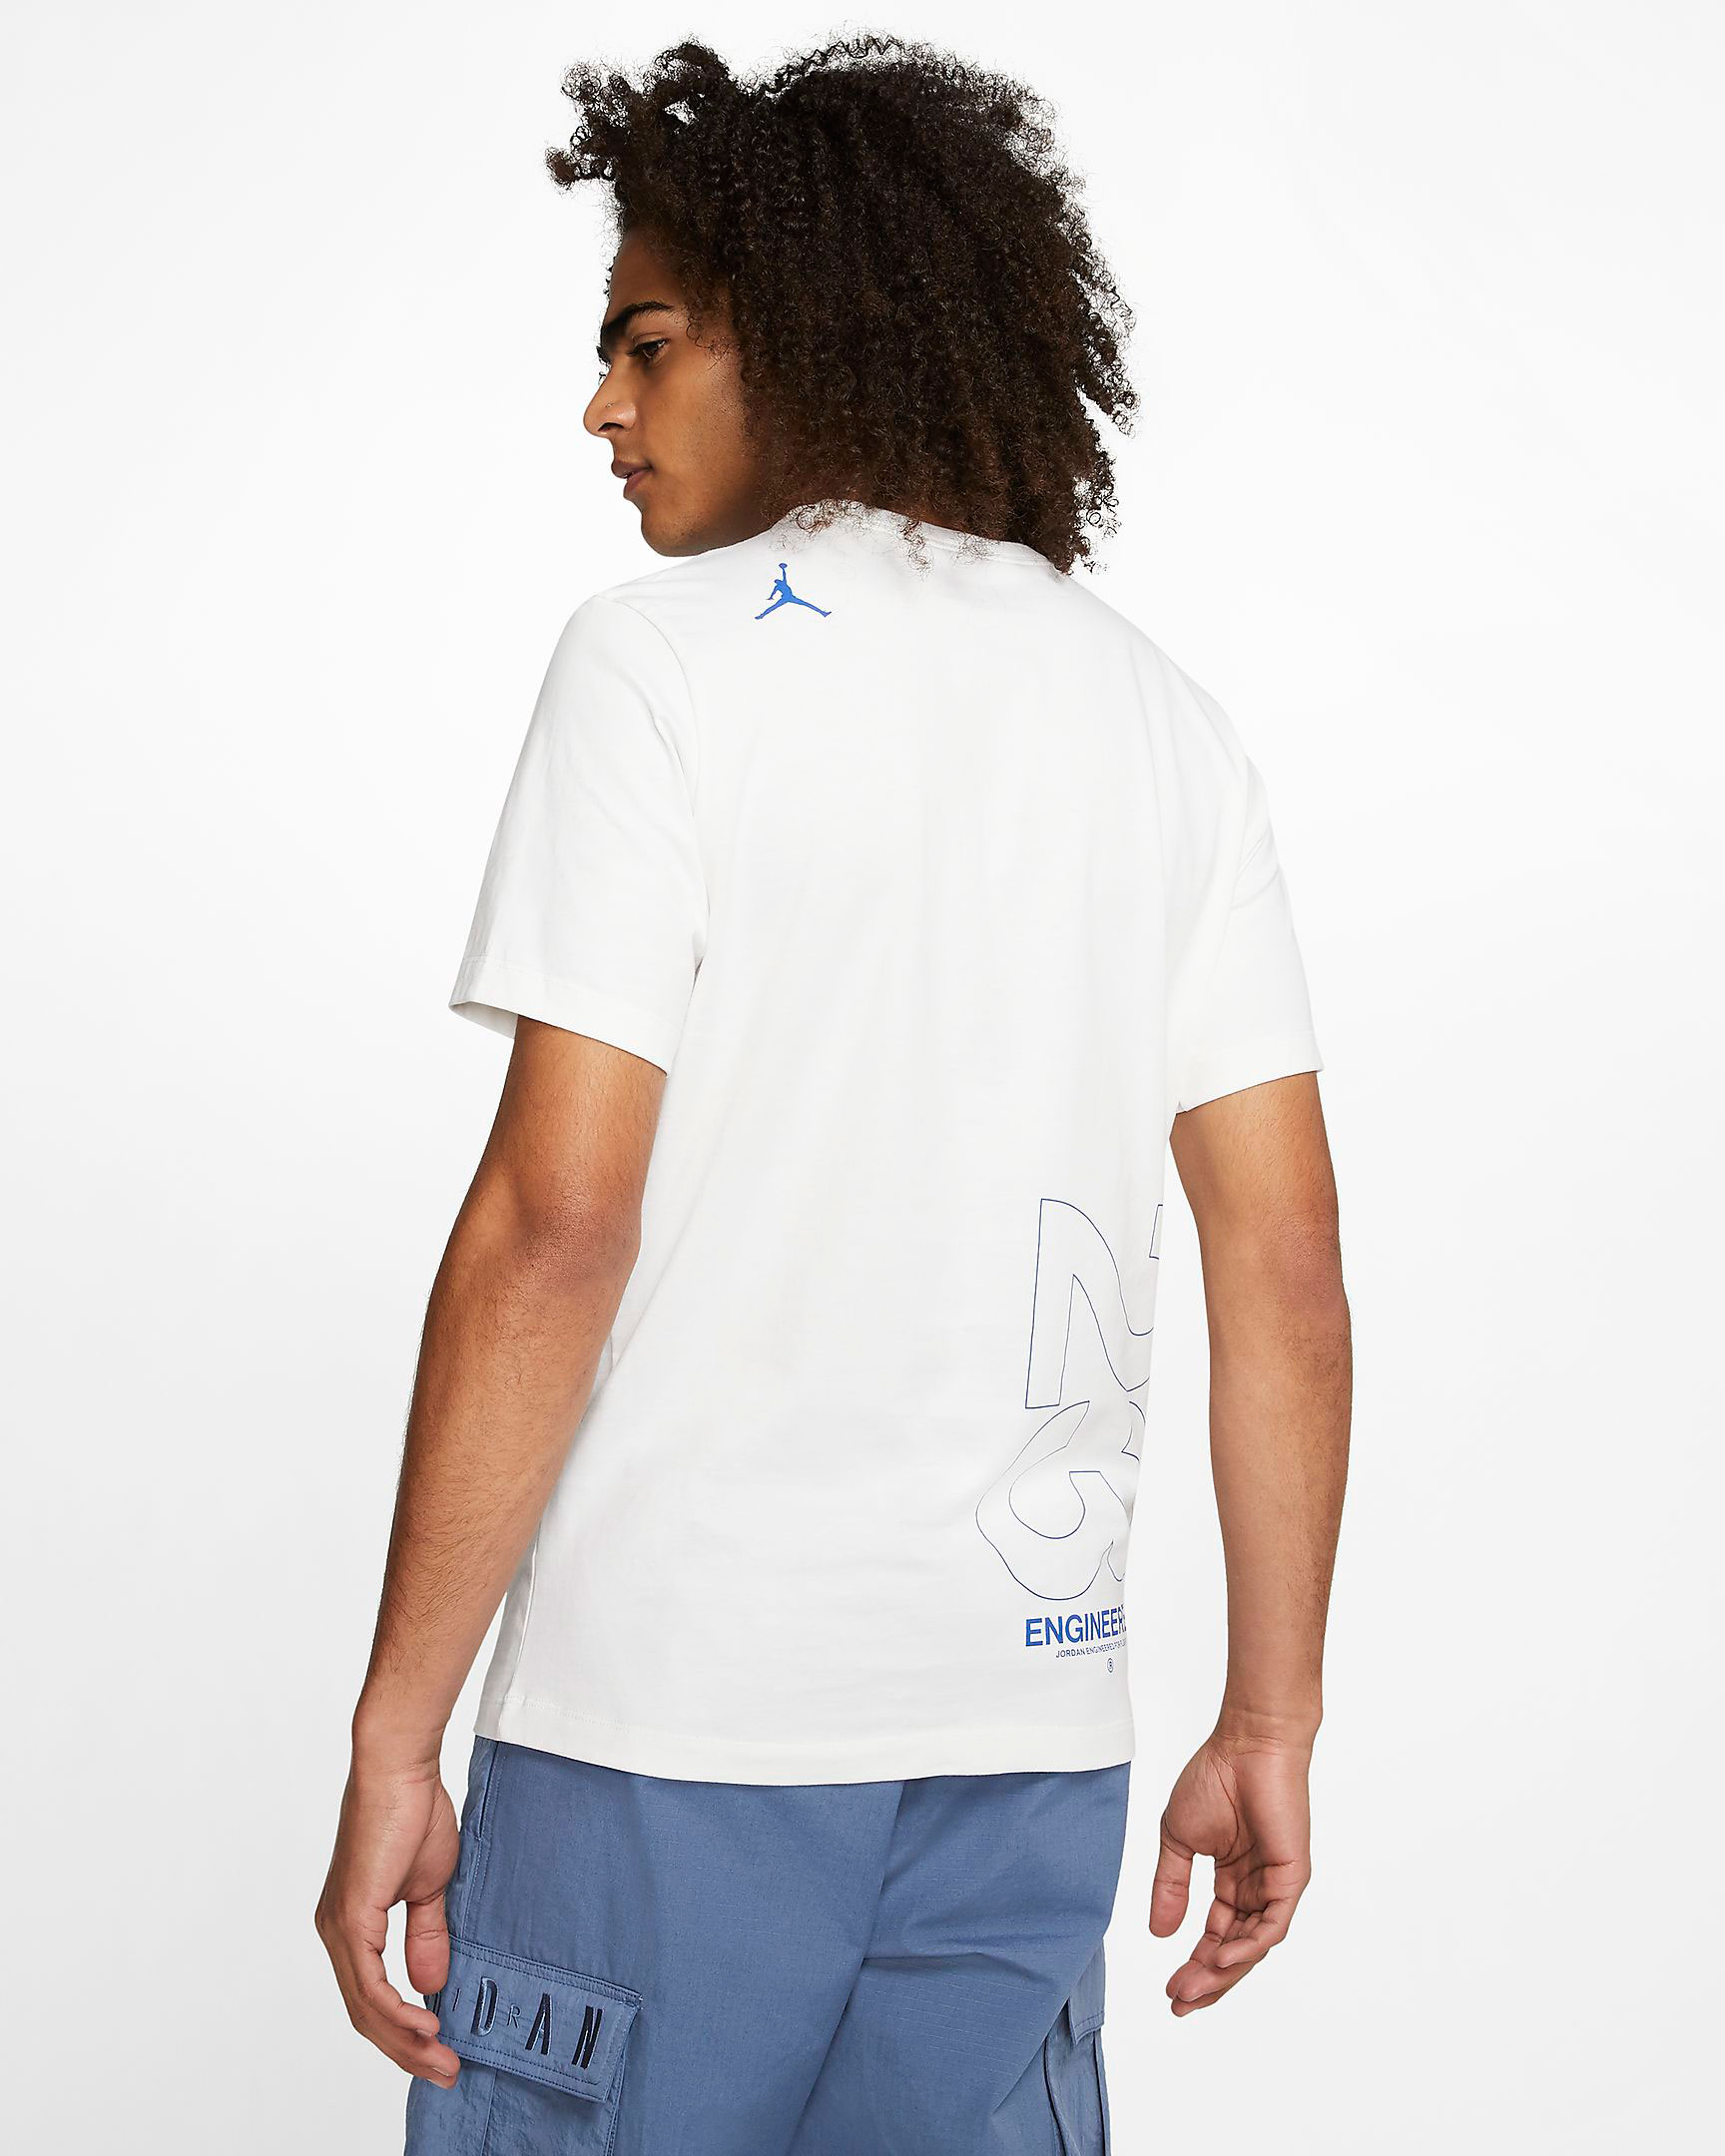 jordan-23-engineered-shirt-white-blue-2